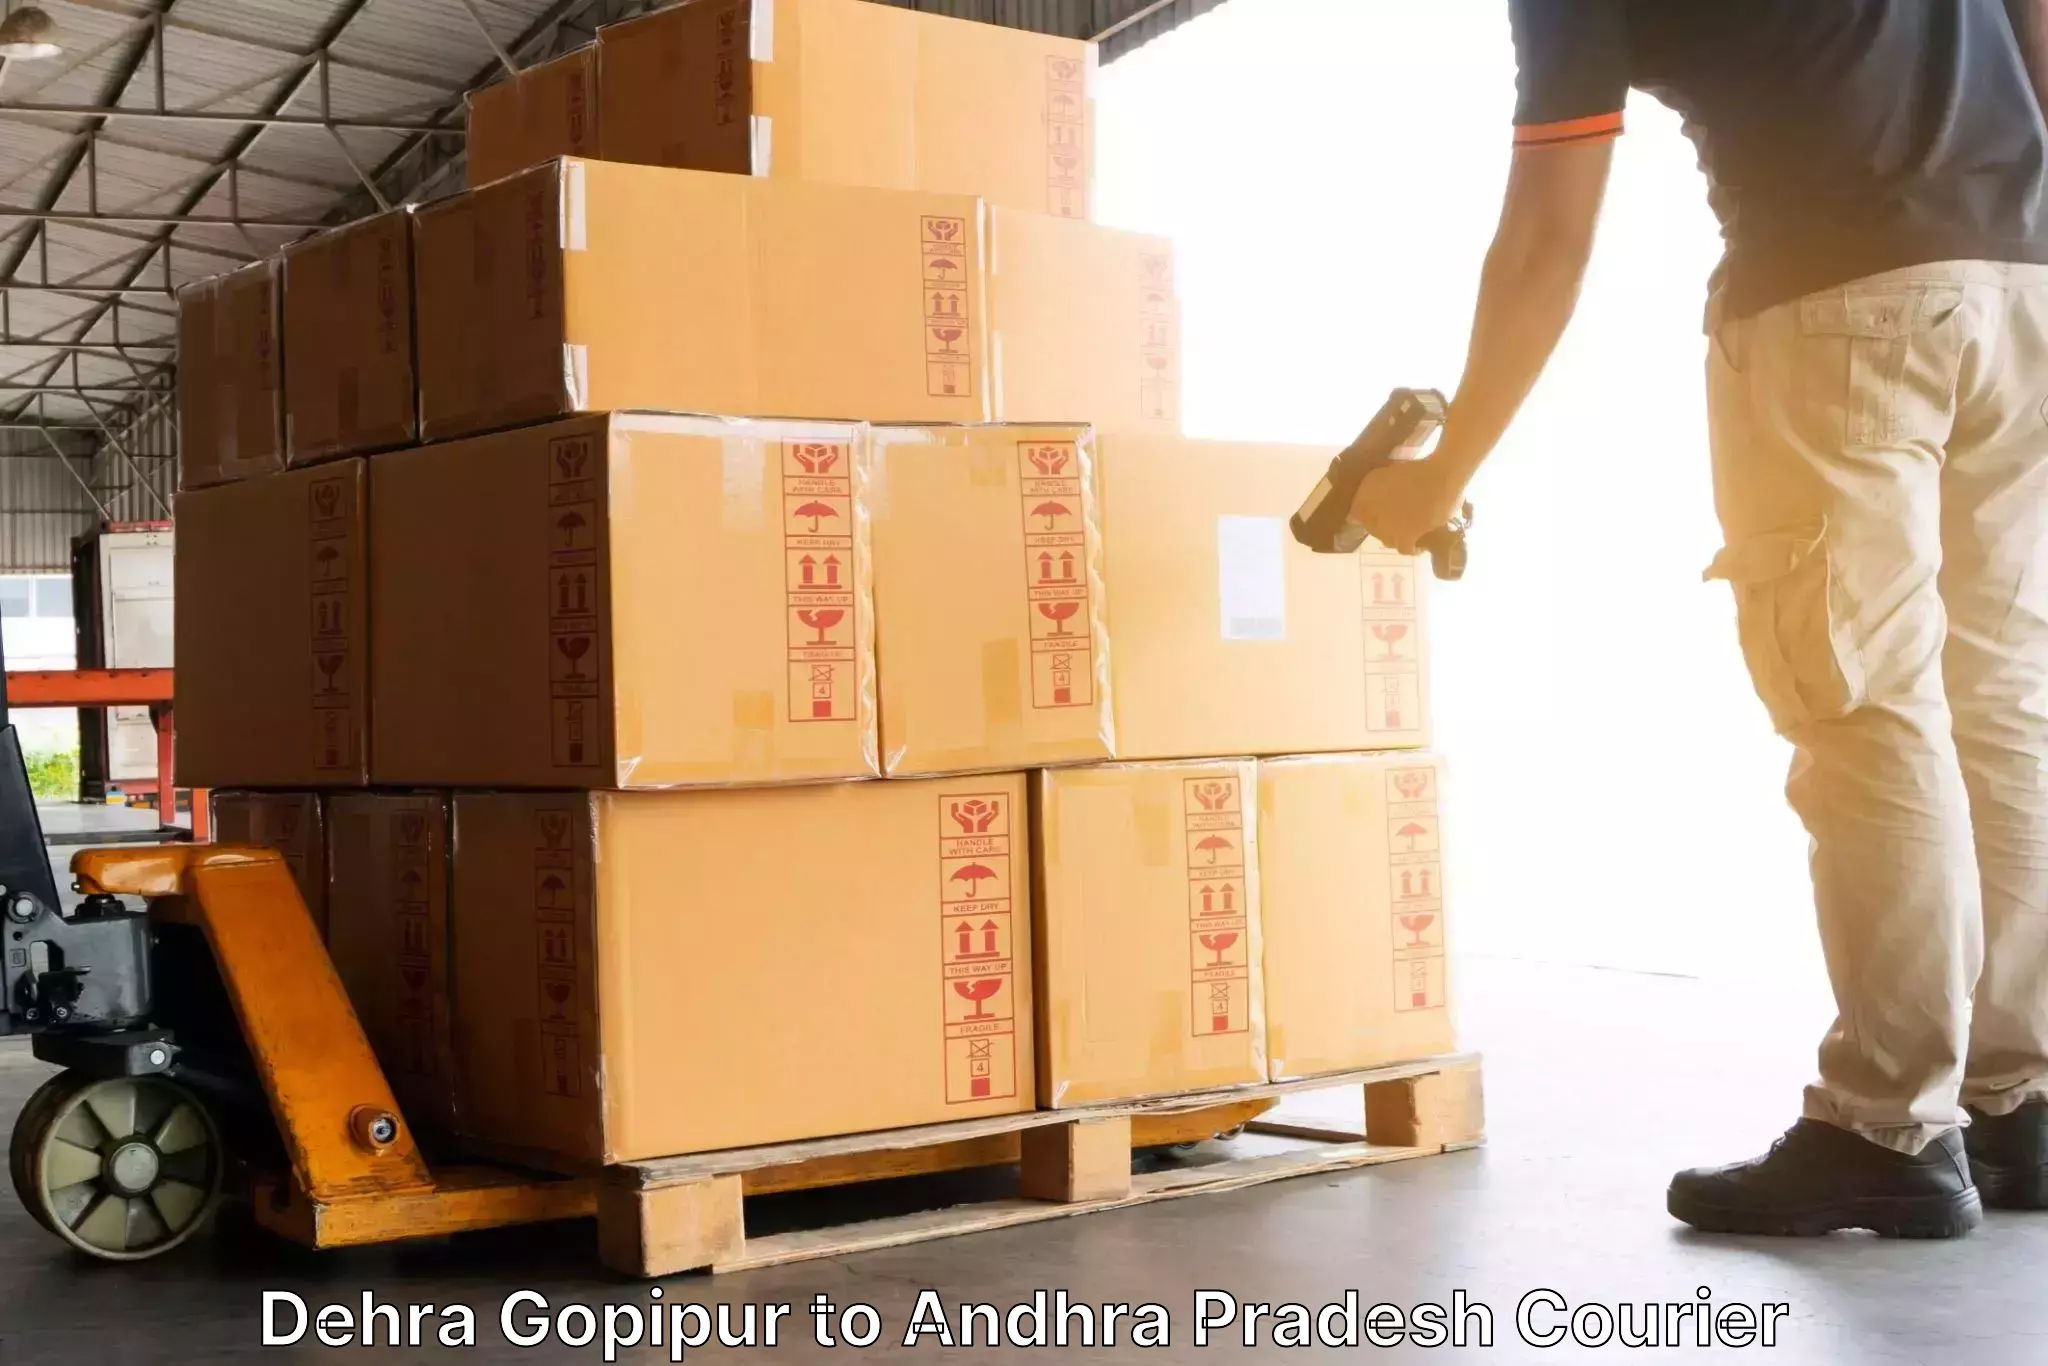 Express logistics providers Dehra Gopipur to Andhra Pradesh